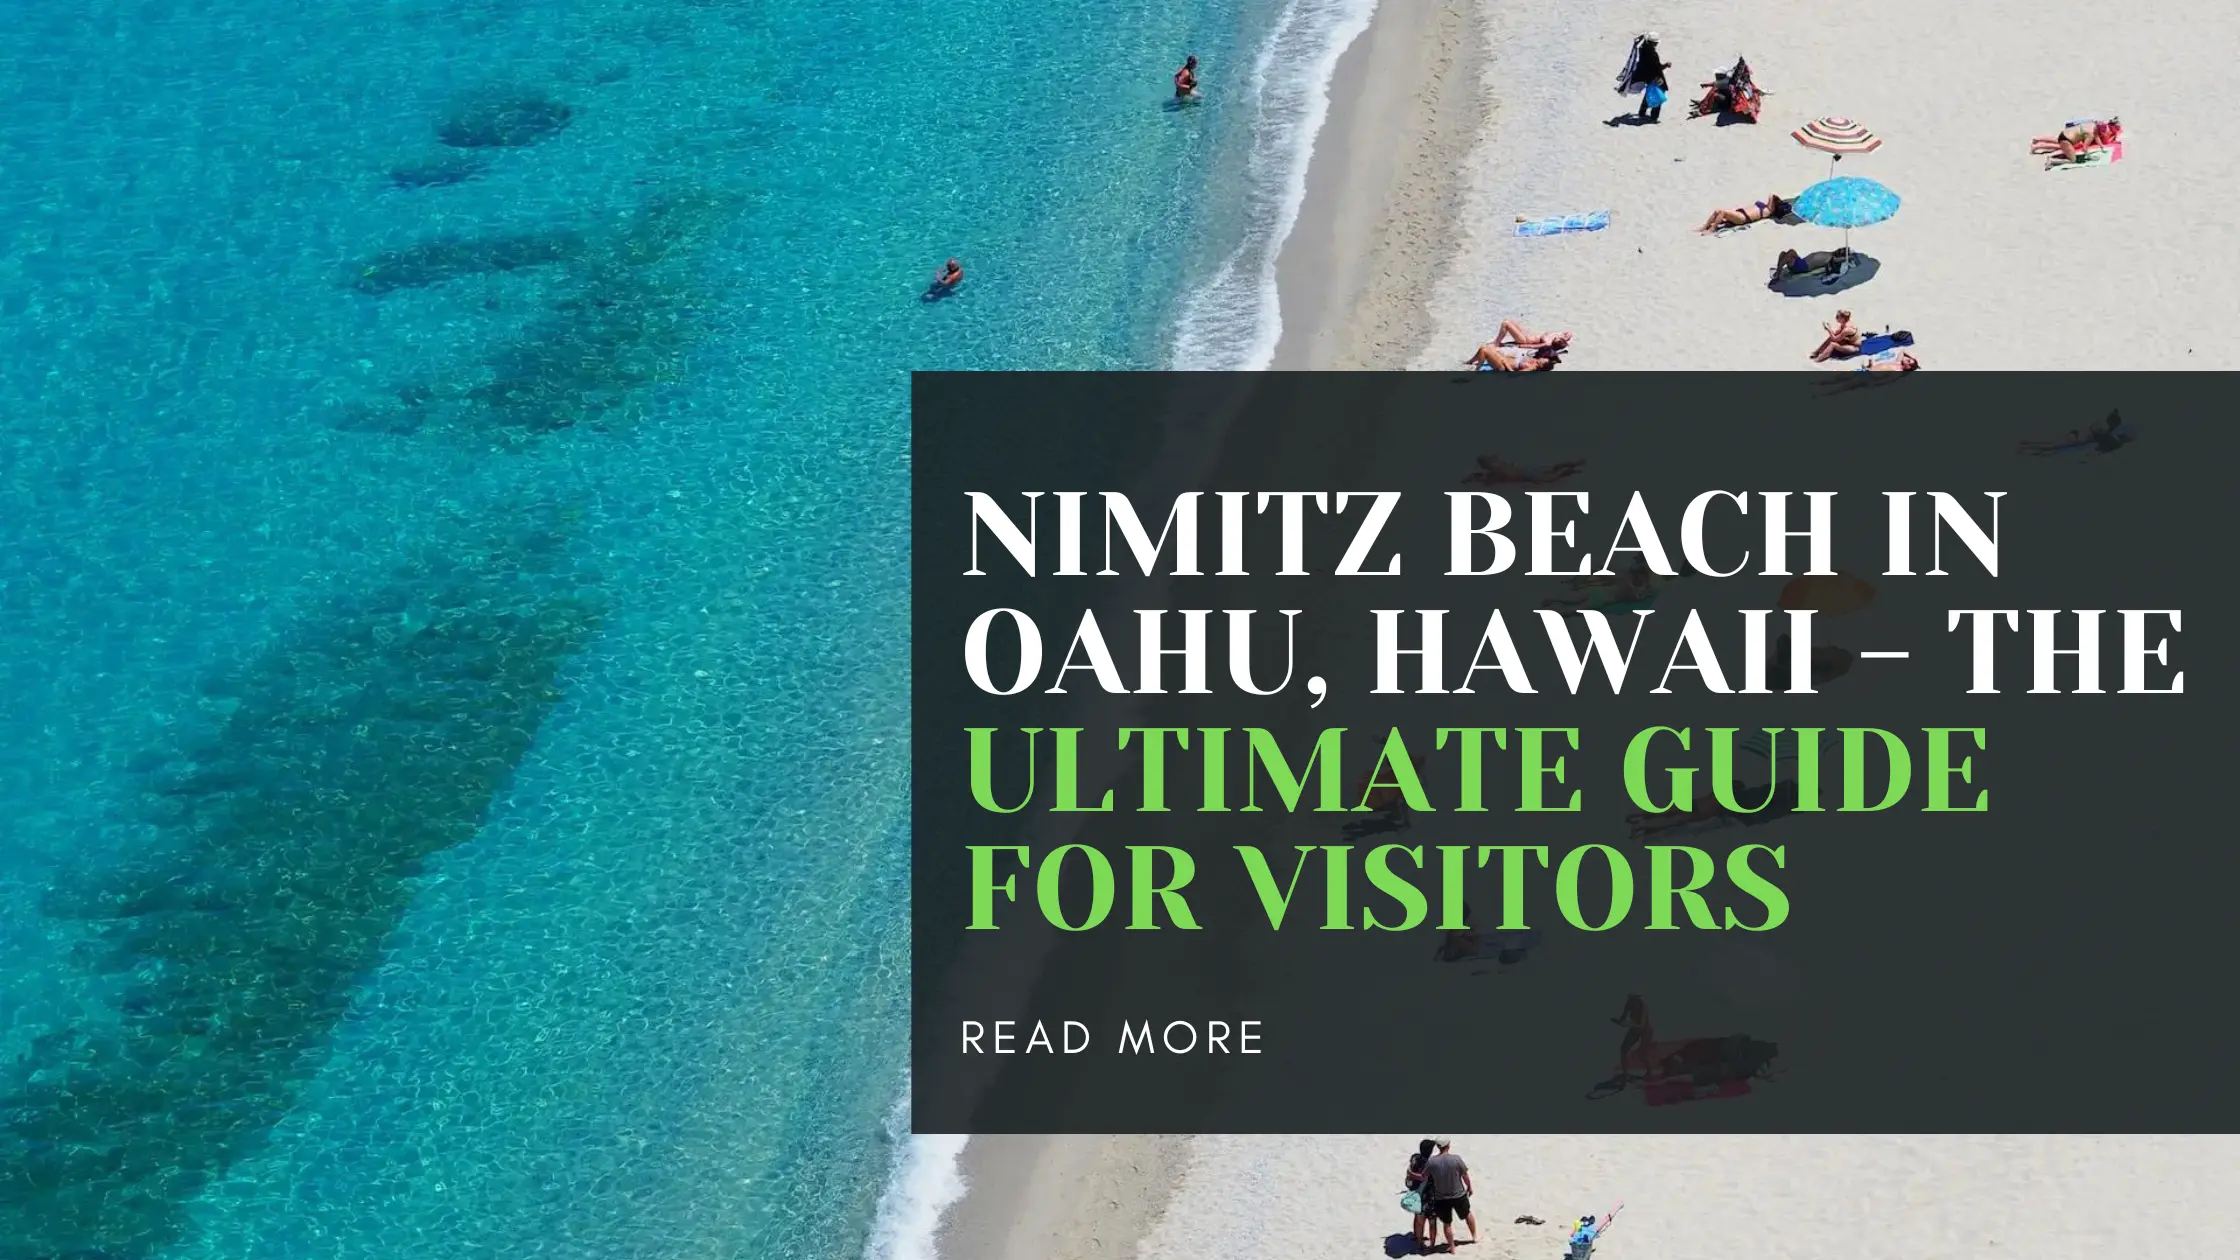 Nimitz Beach in Oahu, Hawaii - The Ultimate Guide for Visitors